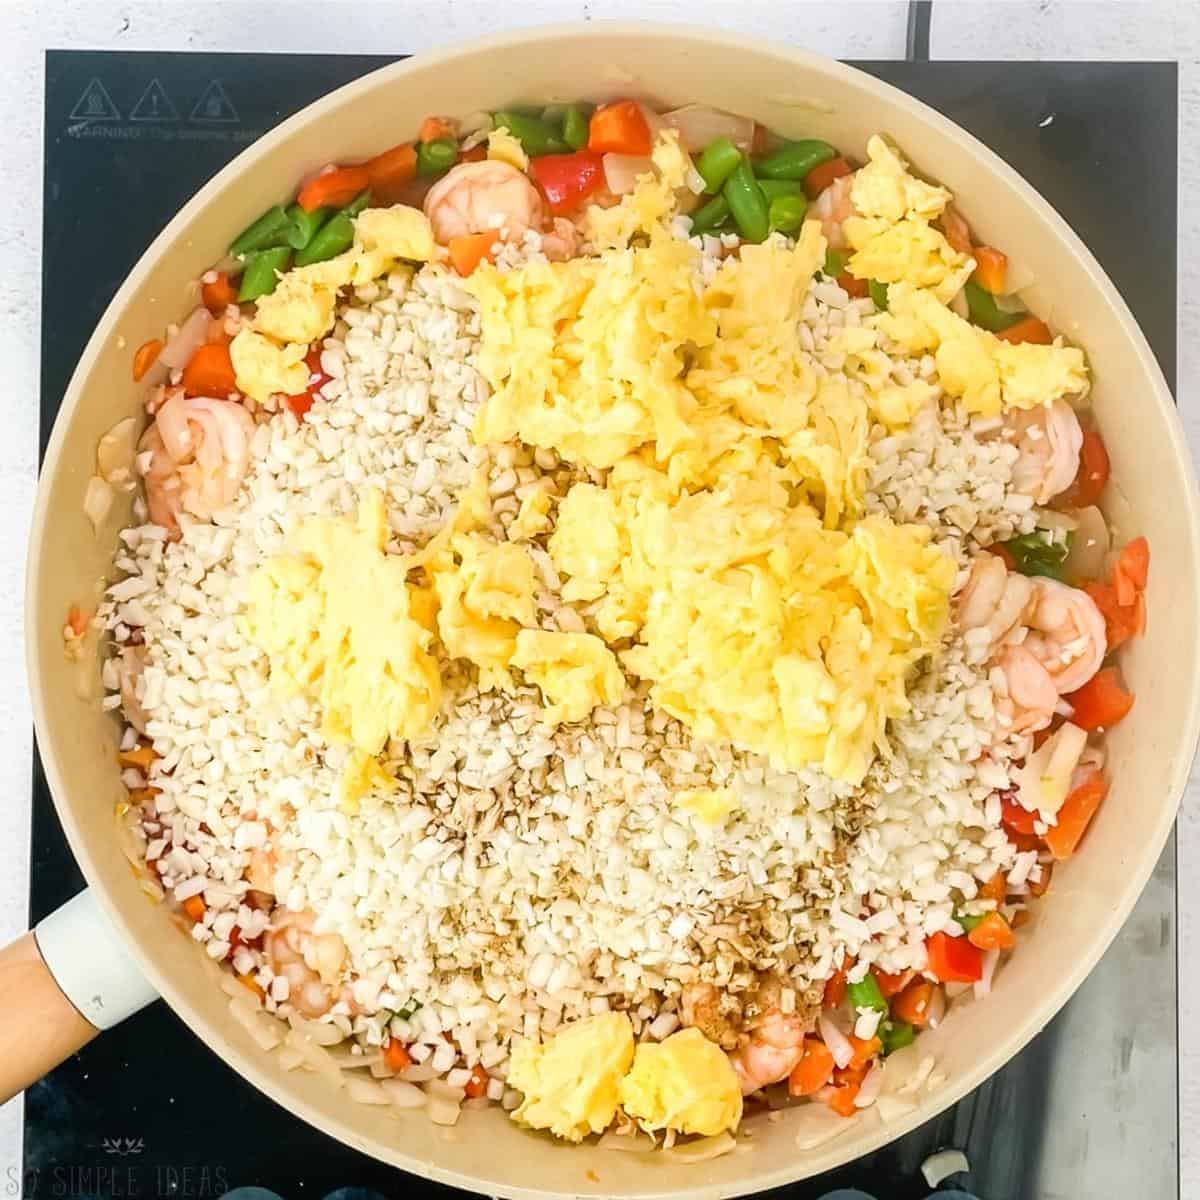 adding cauliflower rice seasoning and egg.